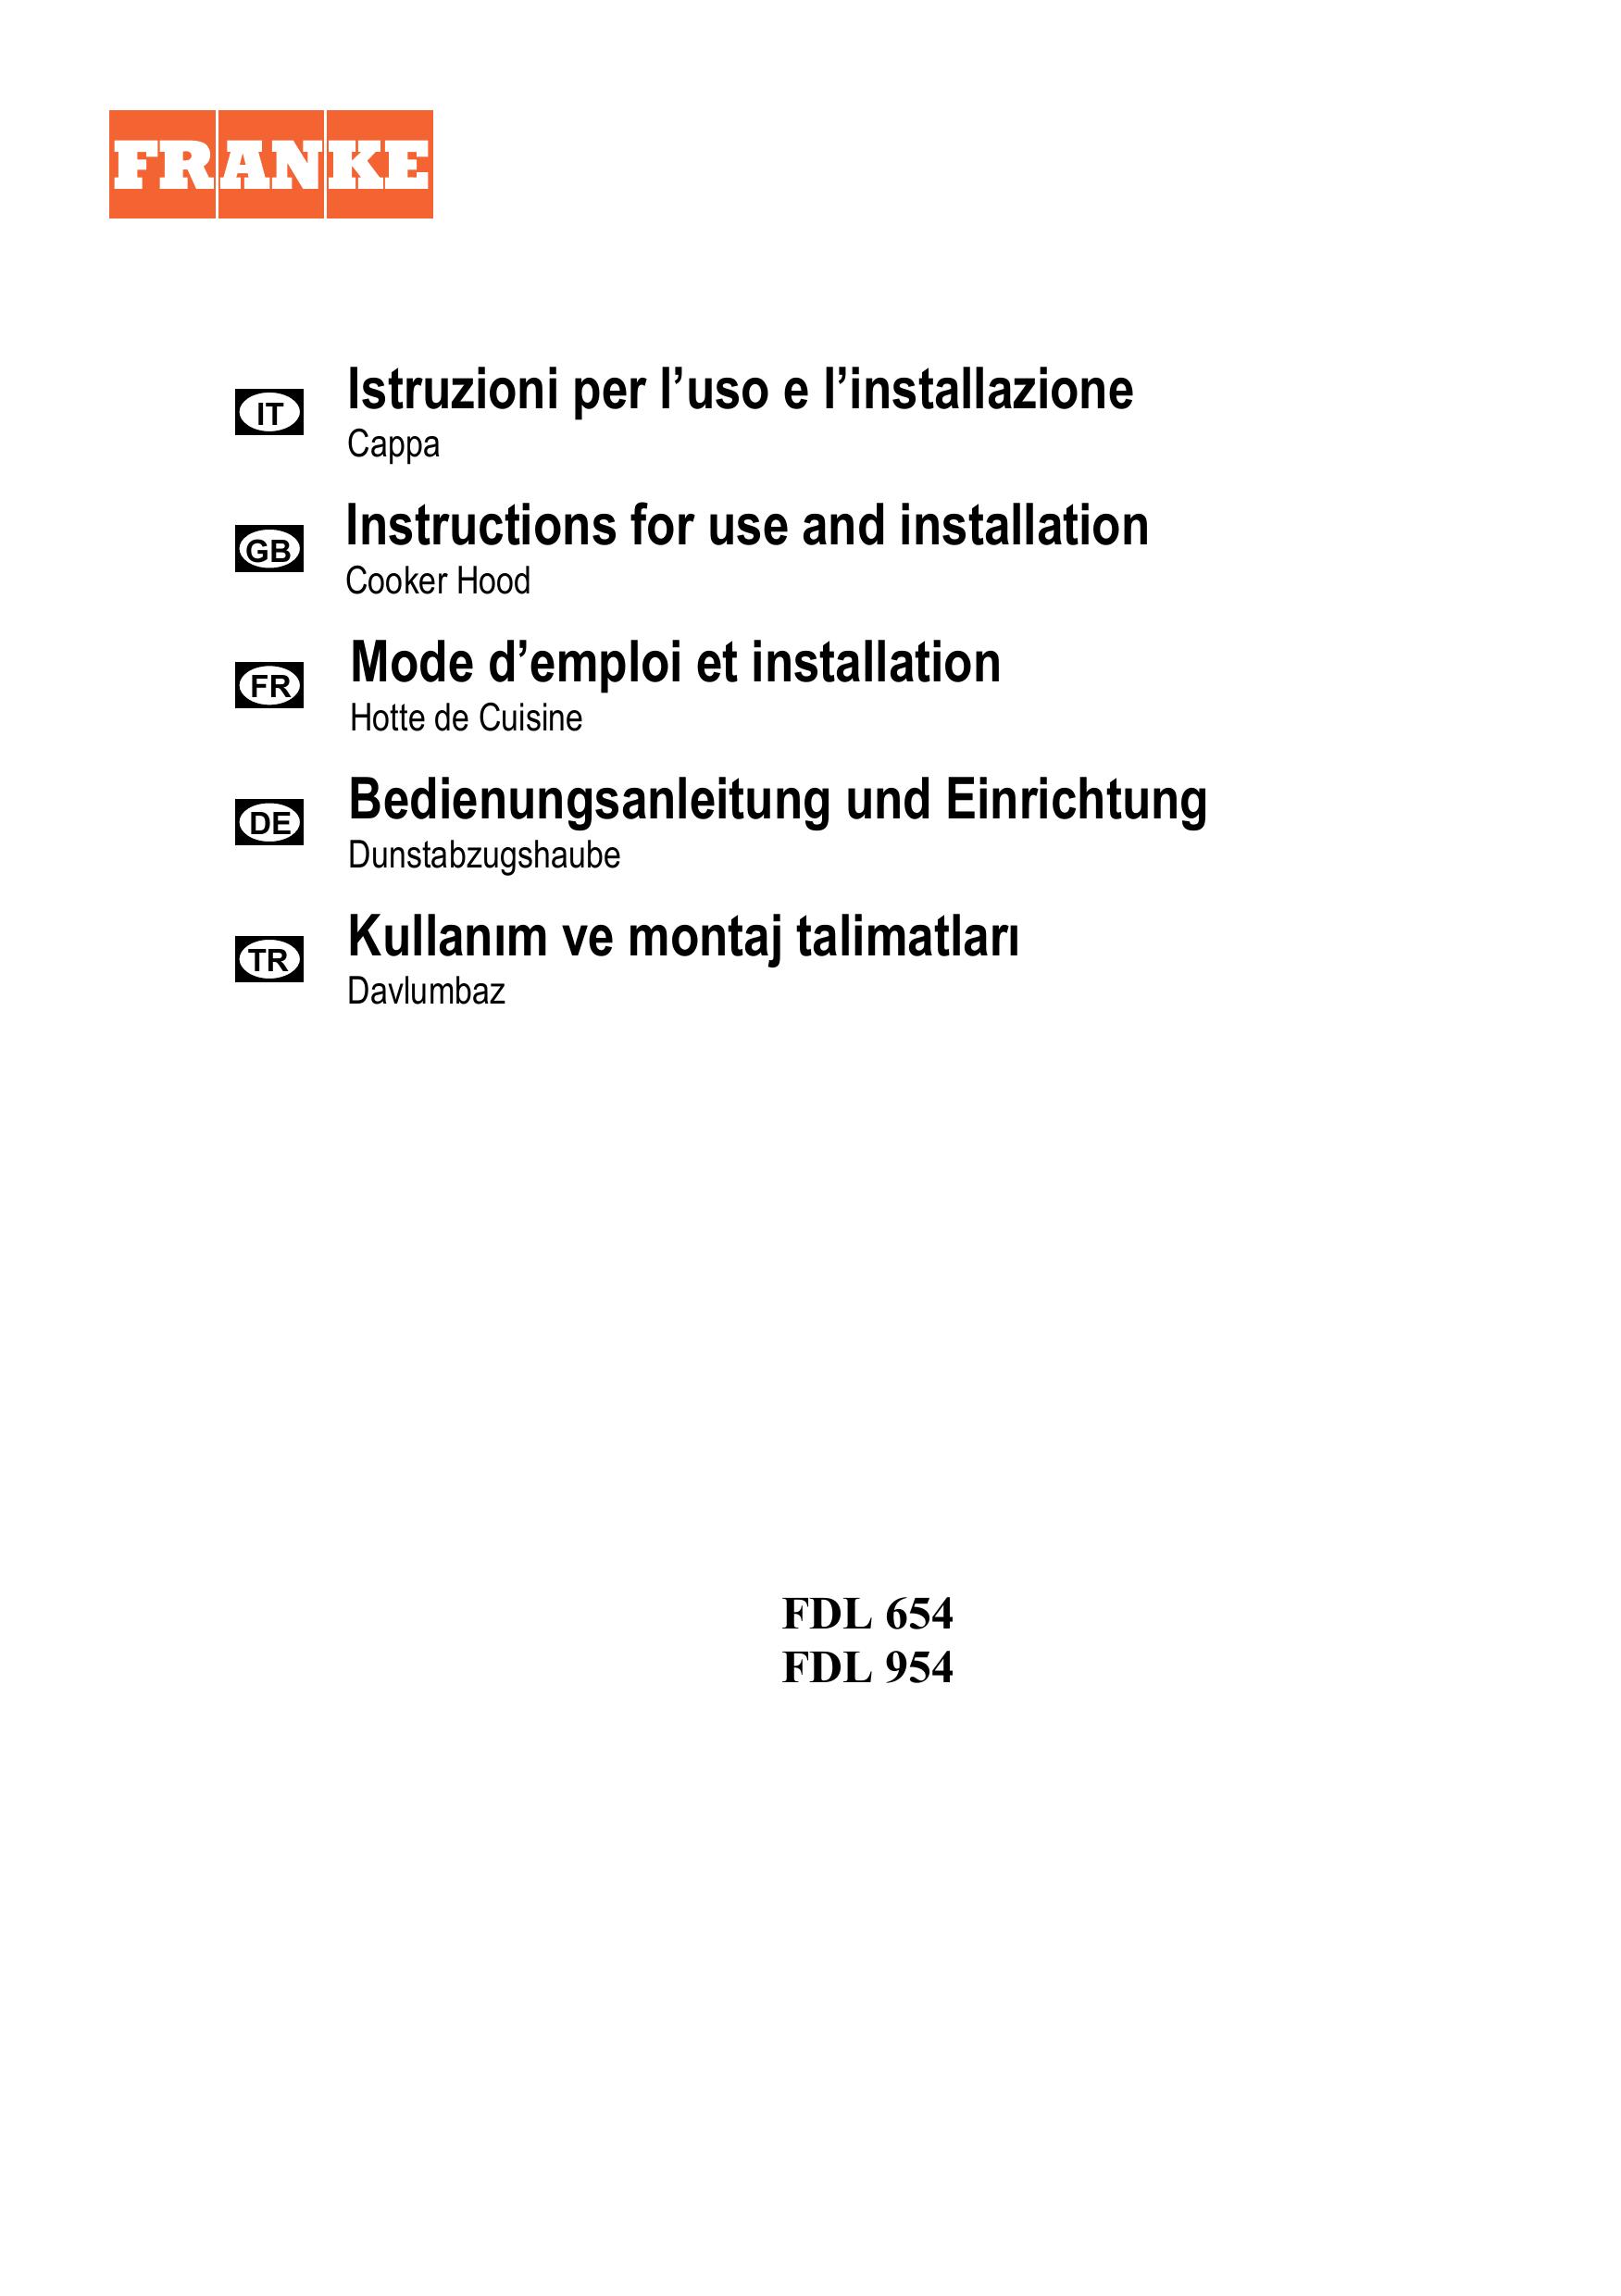 Franke Consumer Products FDL 654 Ventilation Hood User Manual